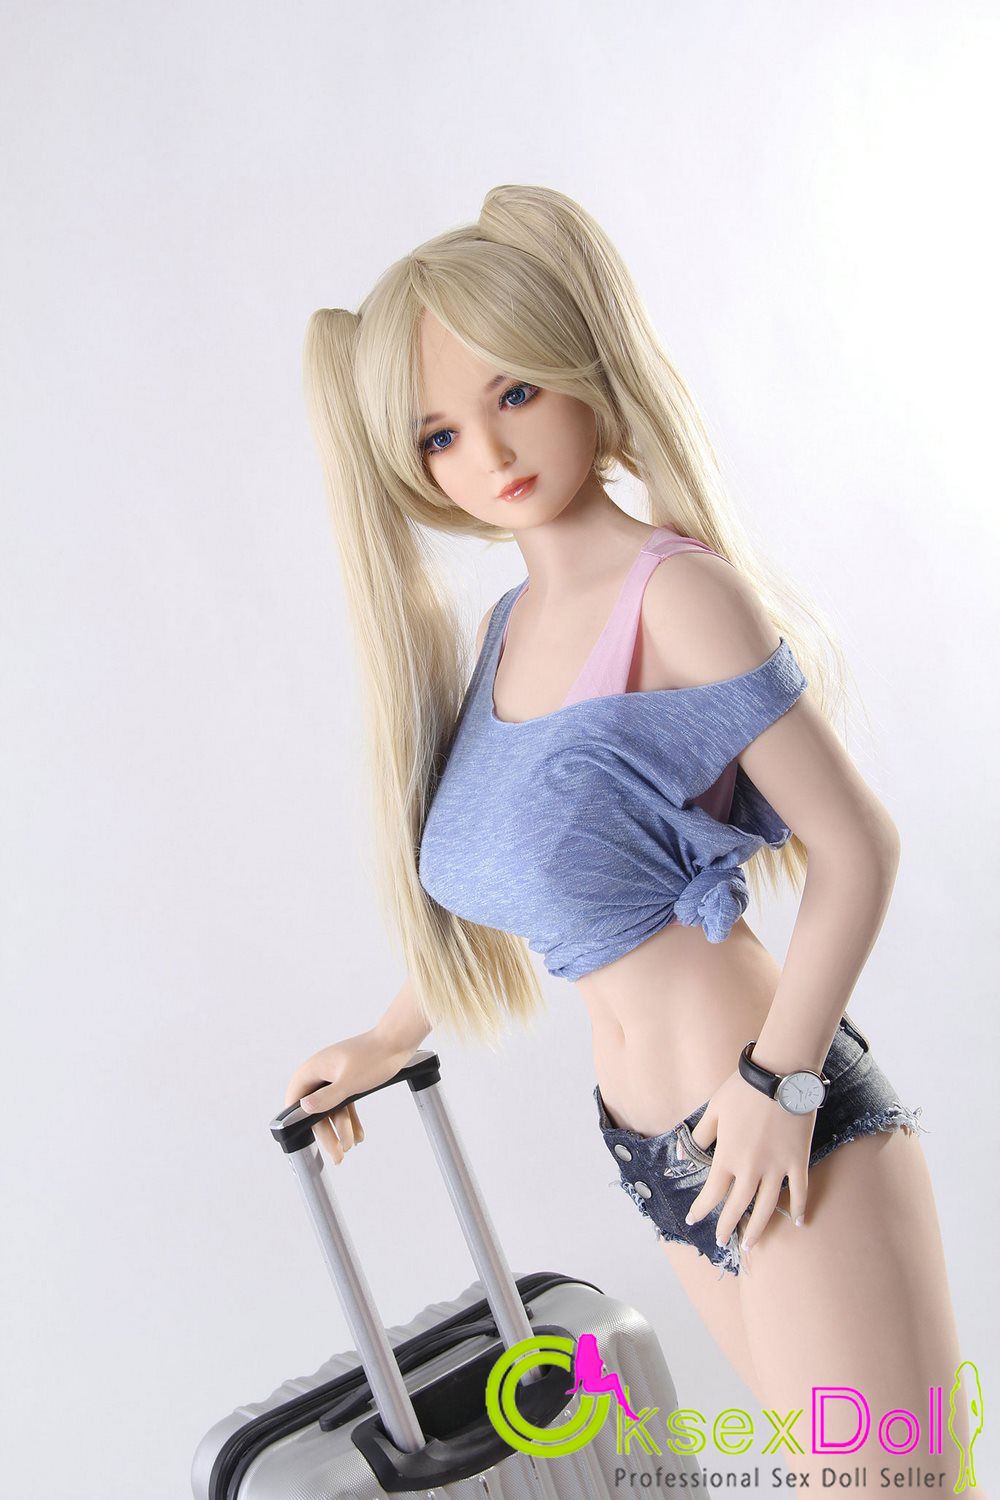 Blond sex dolls images